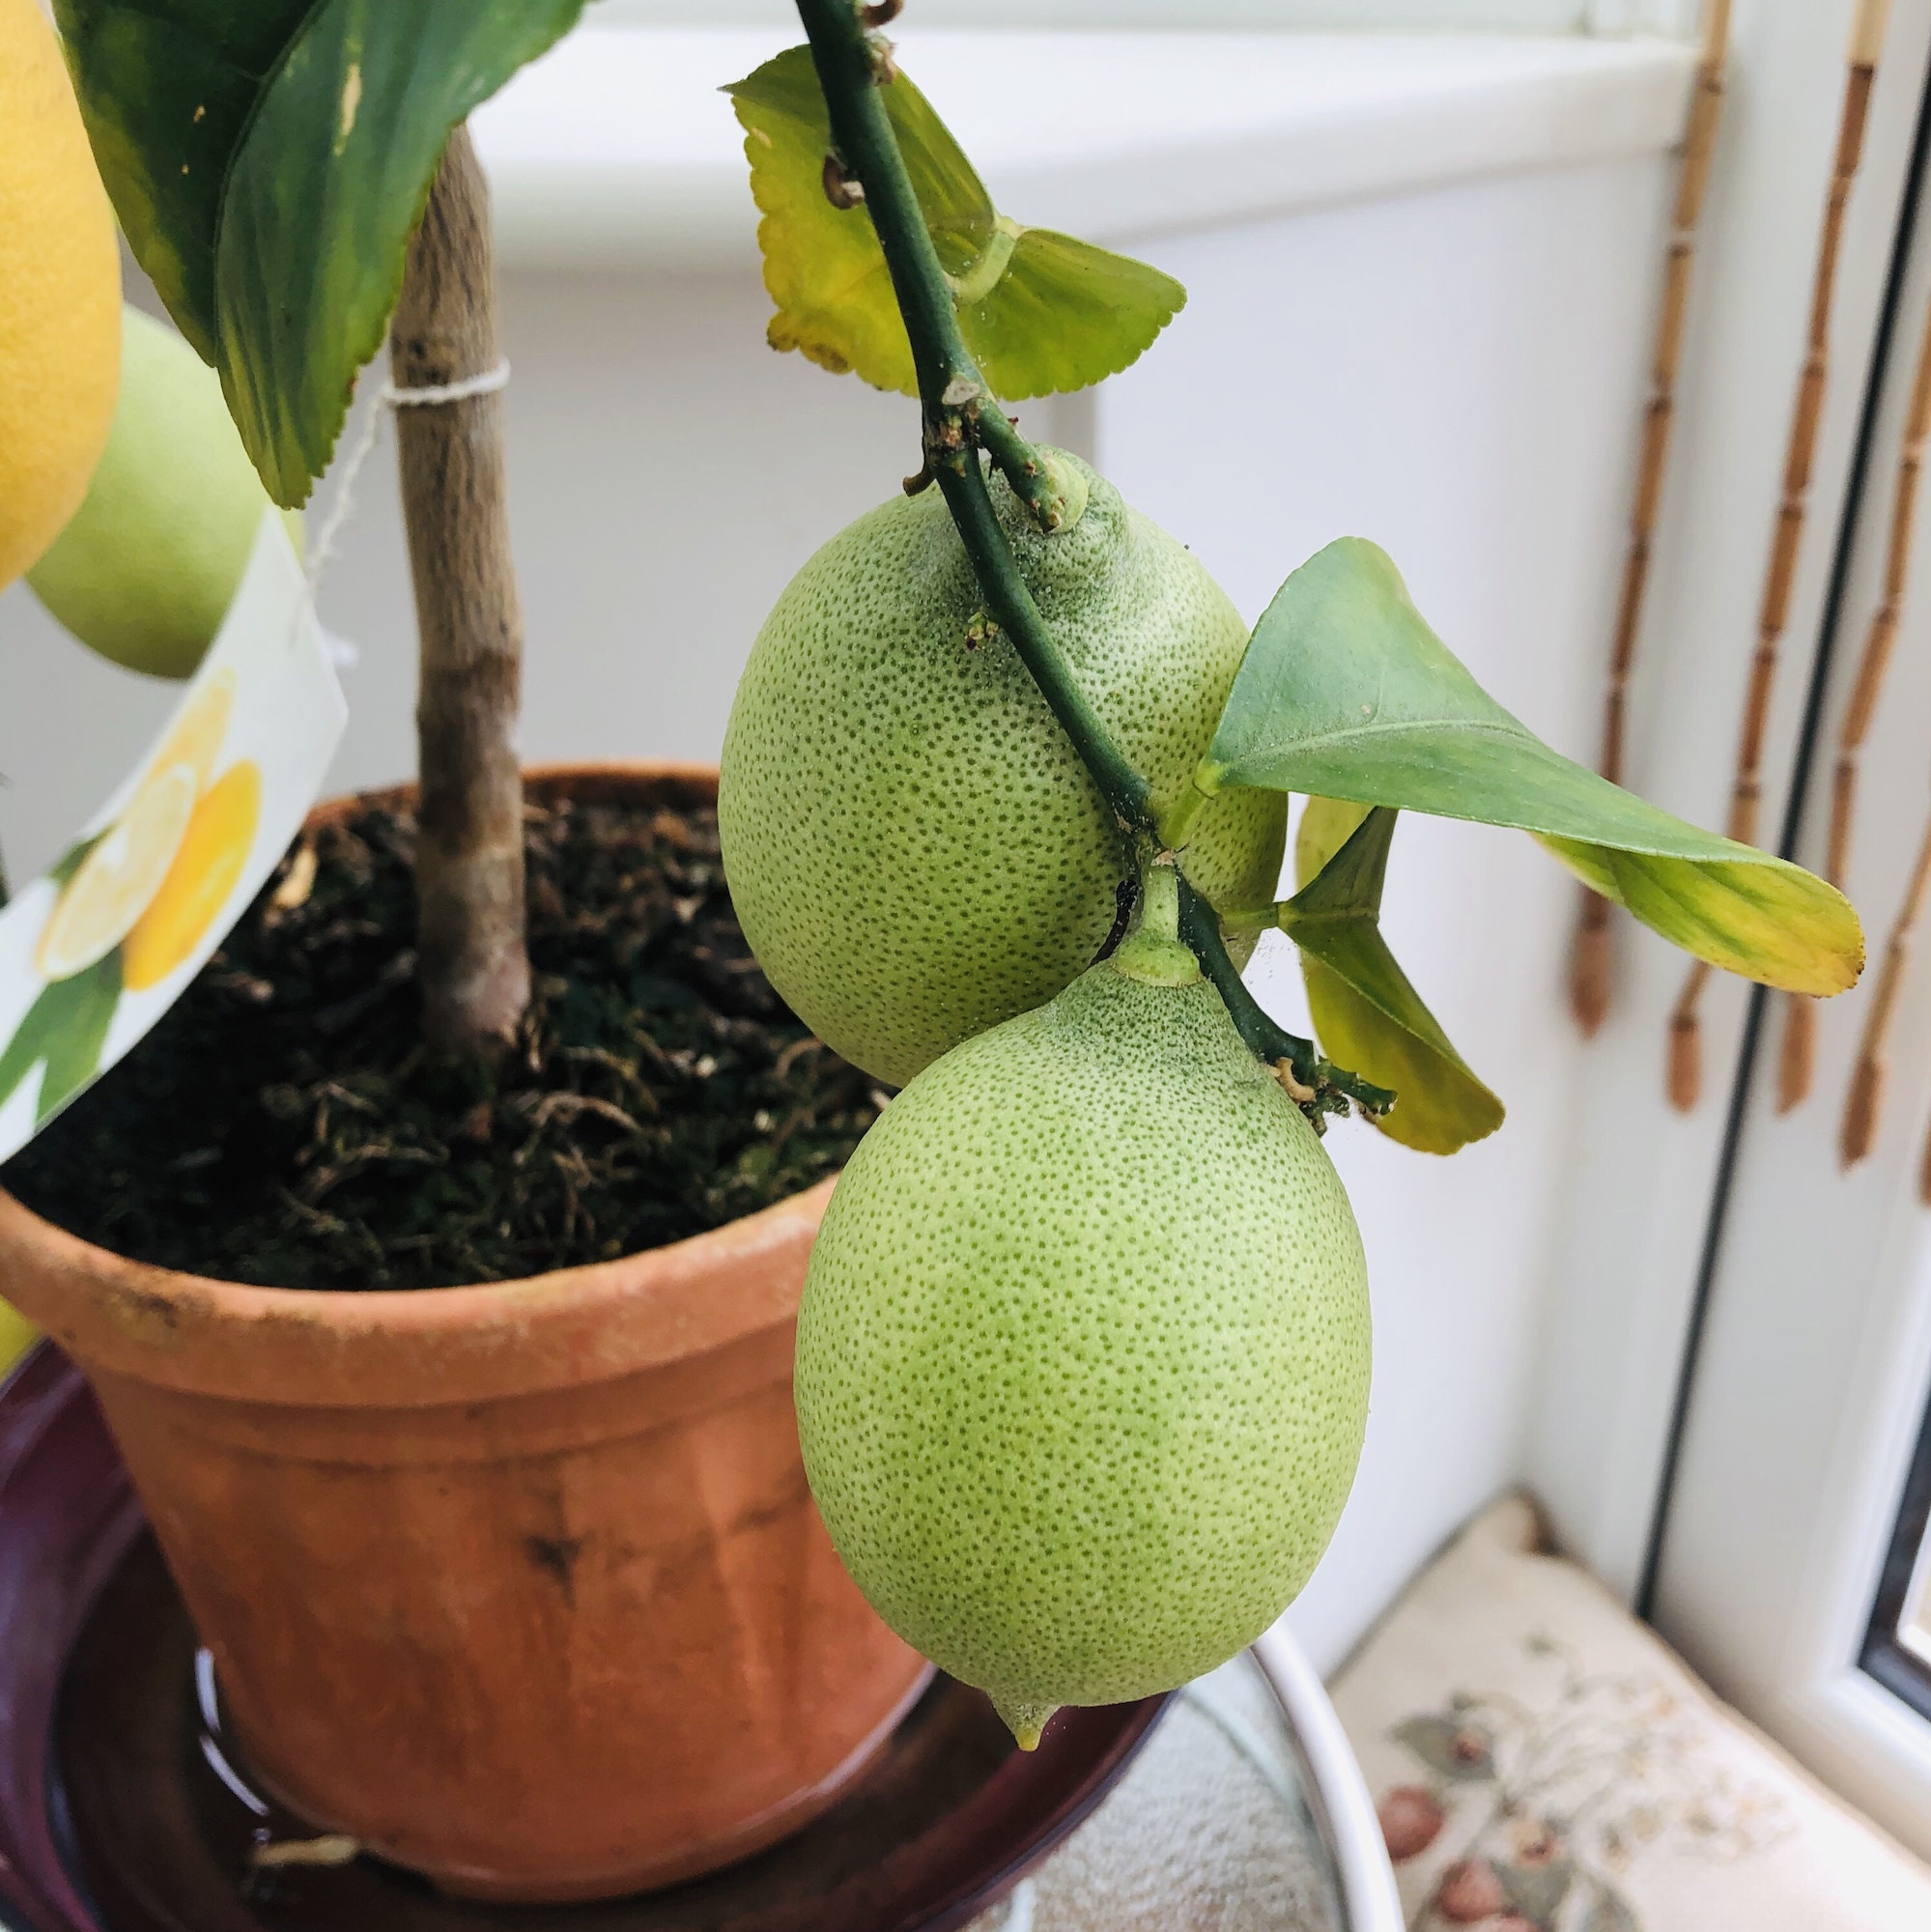 Lemon tree plant growing indoors